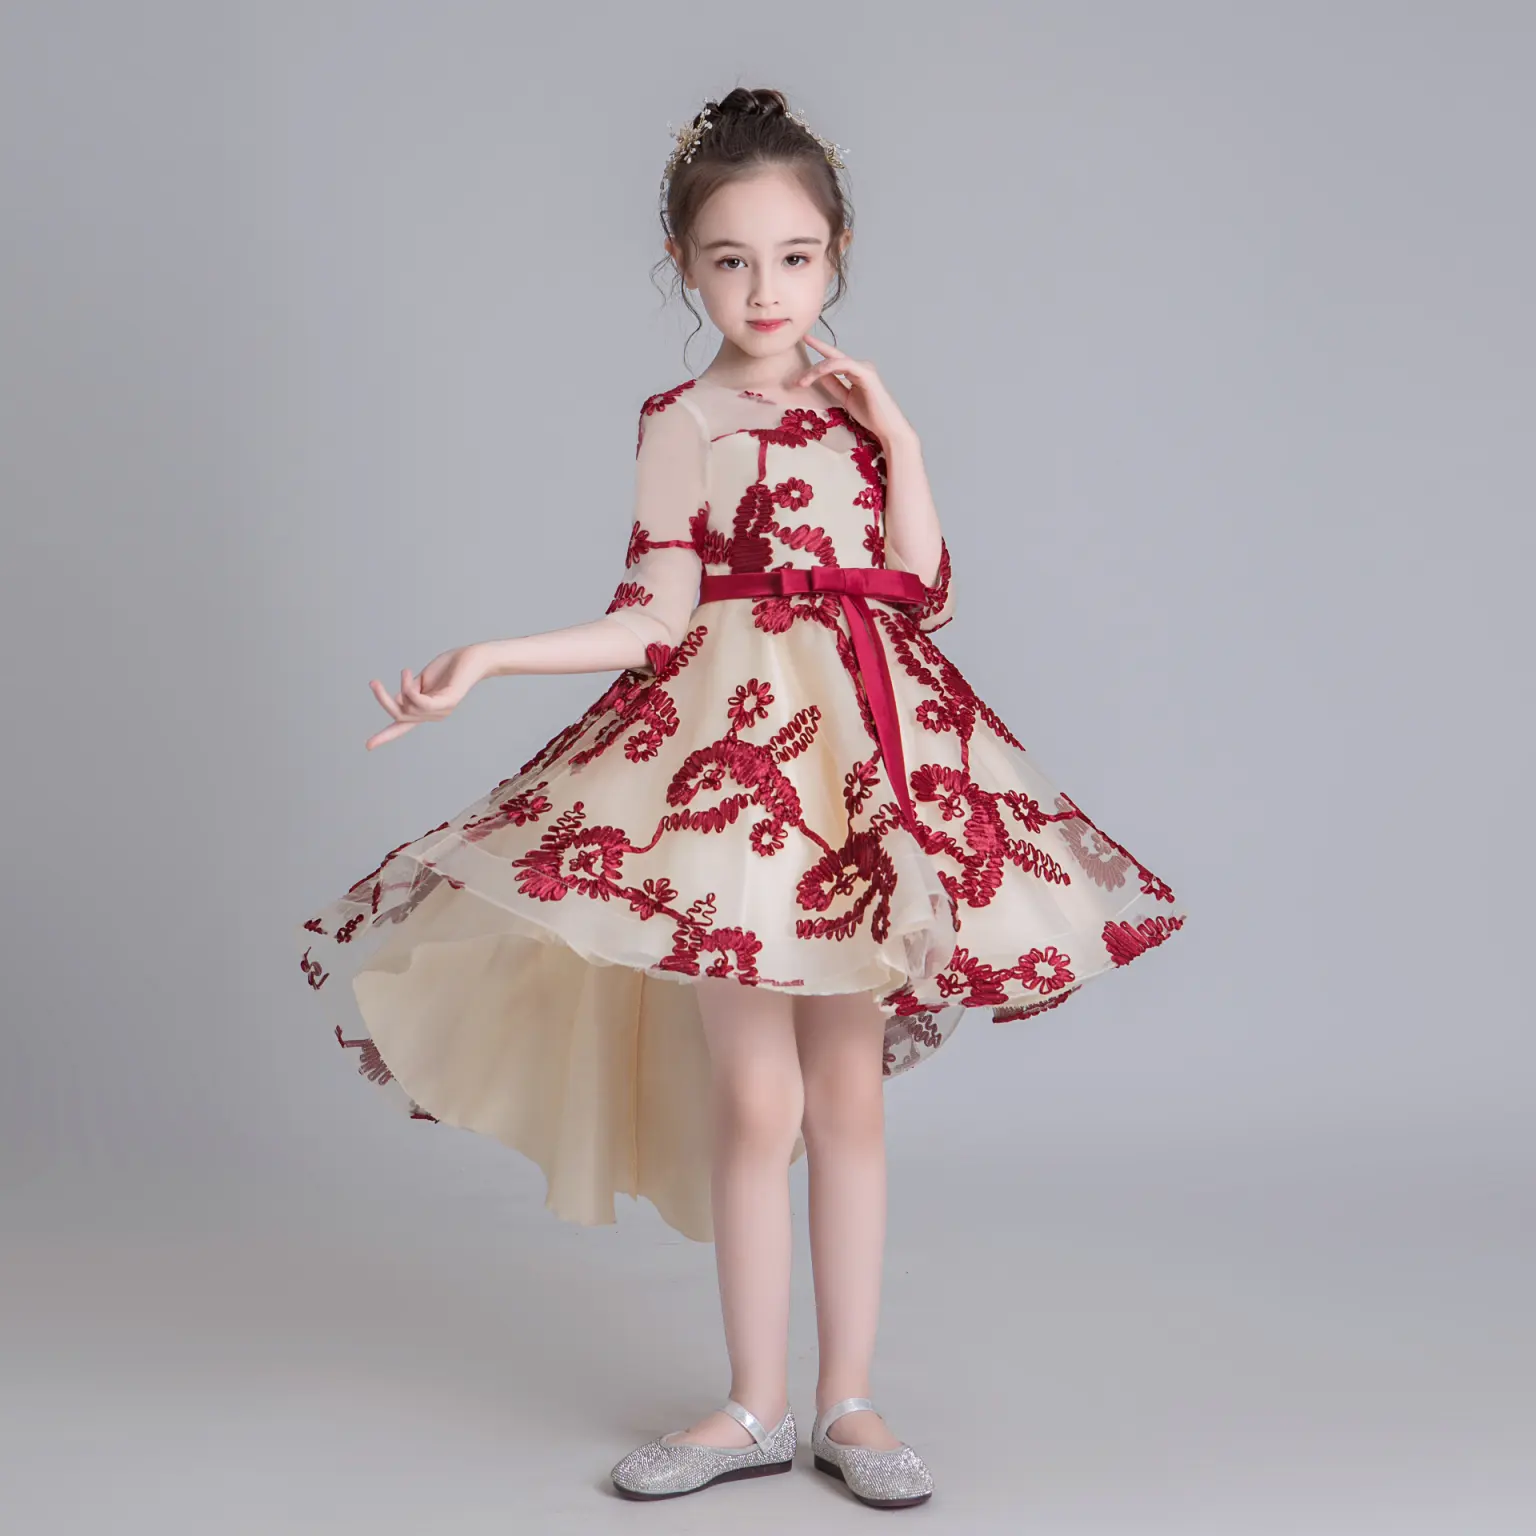 New style children wear princess sleeveless party dress beautiful wedding dress for kids